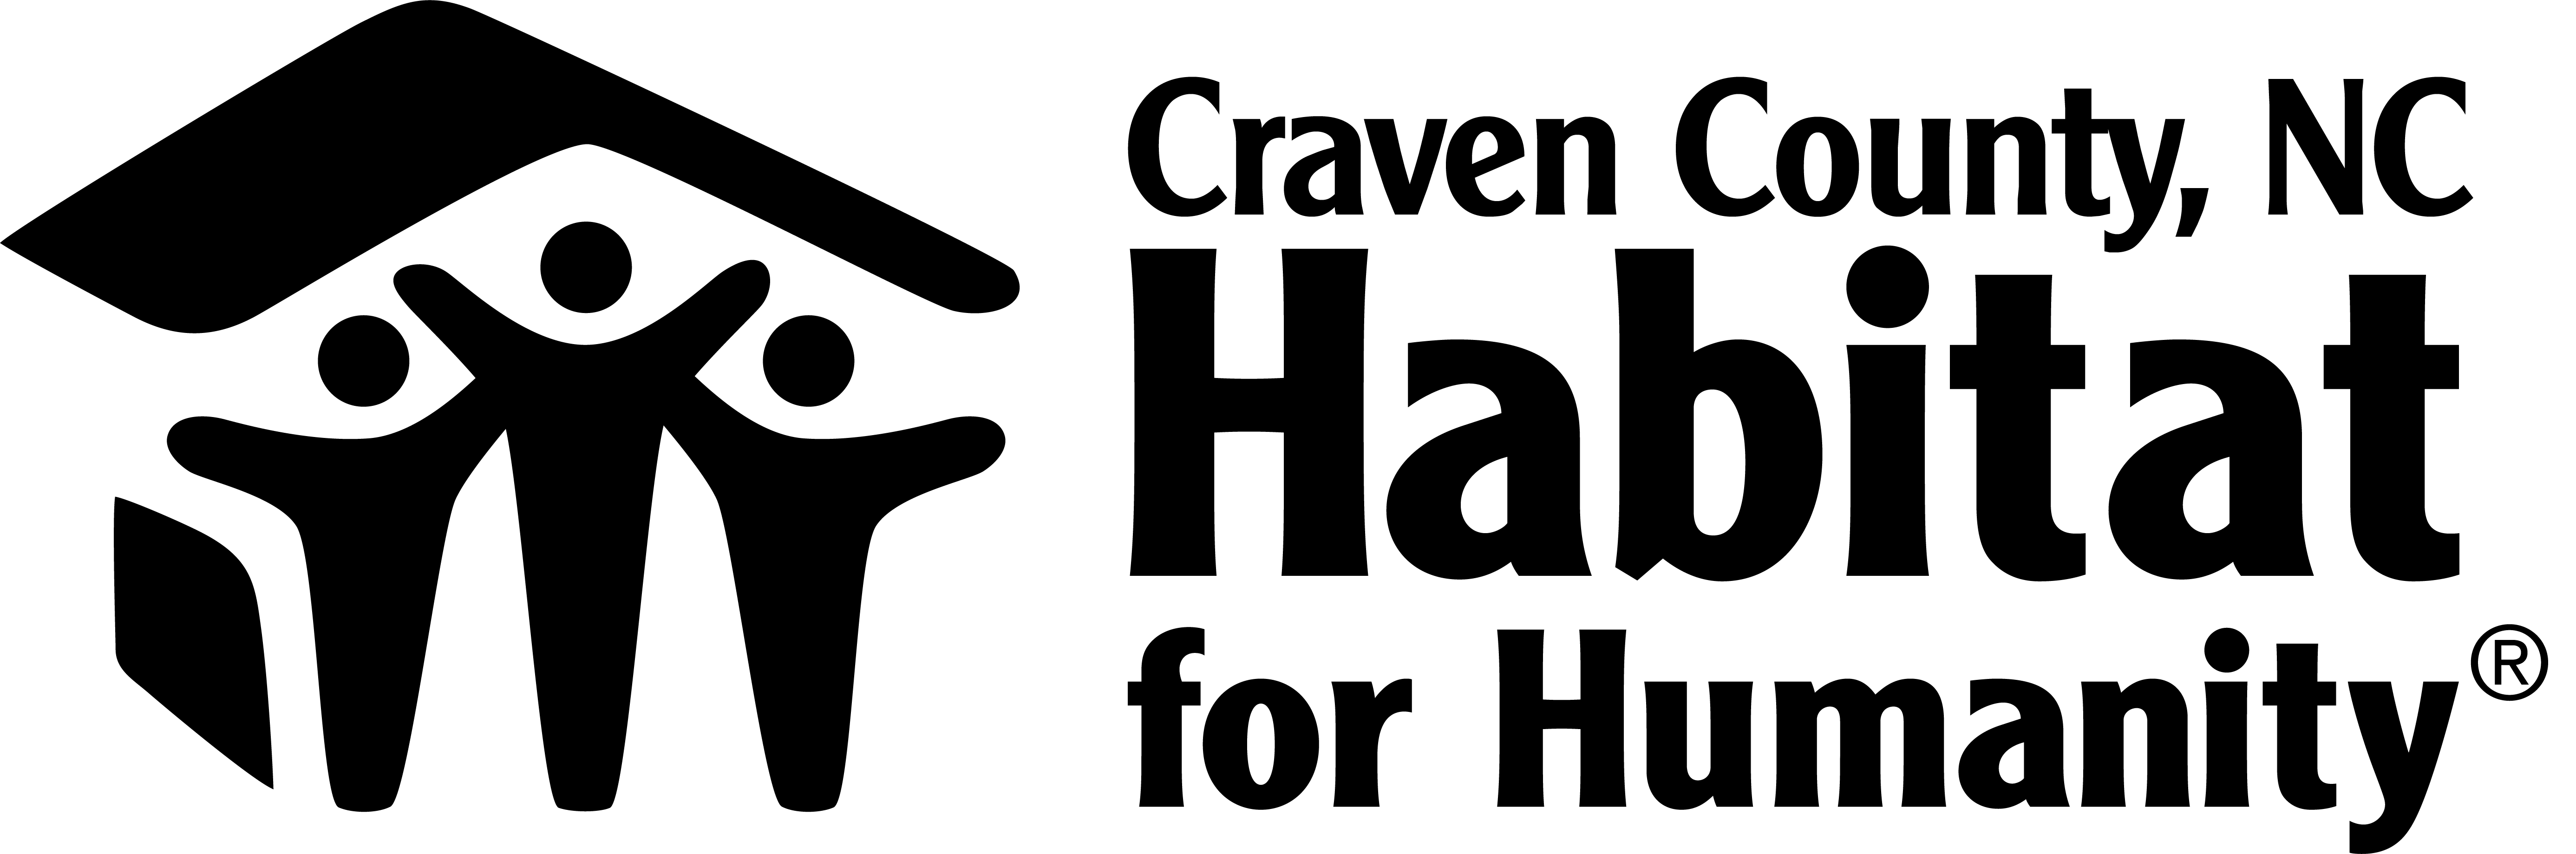 Habitat of Craven County